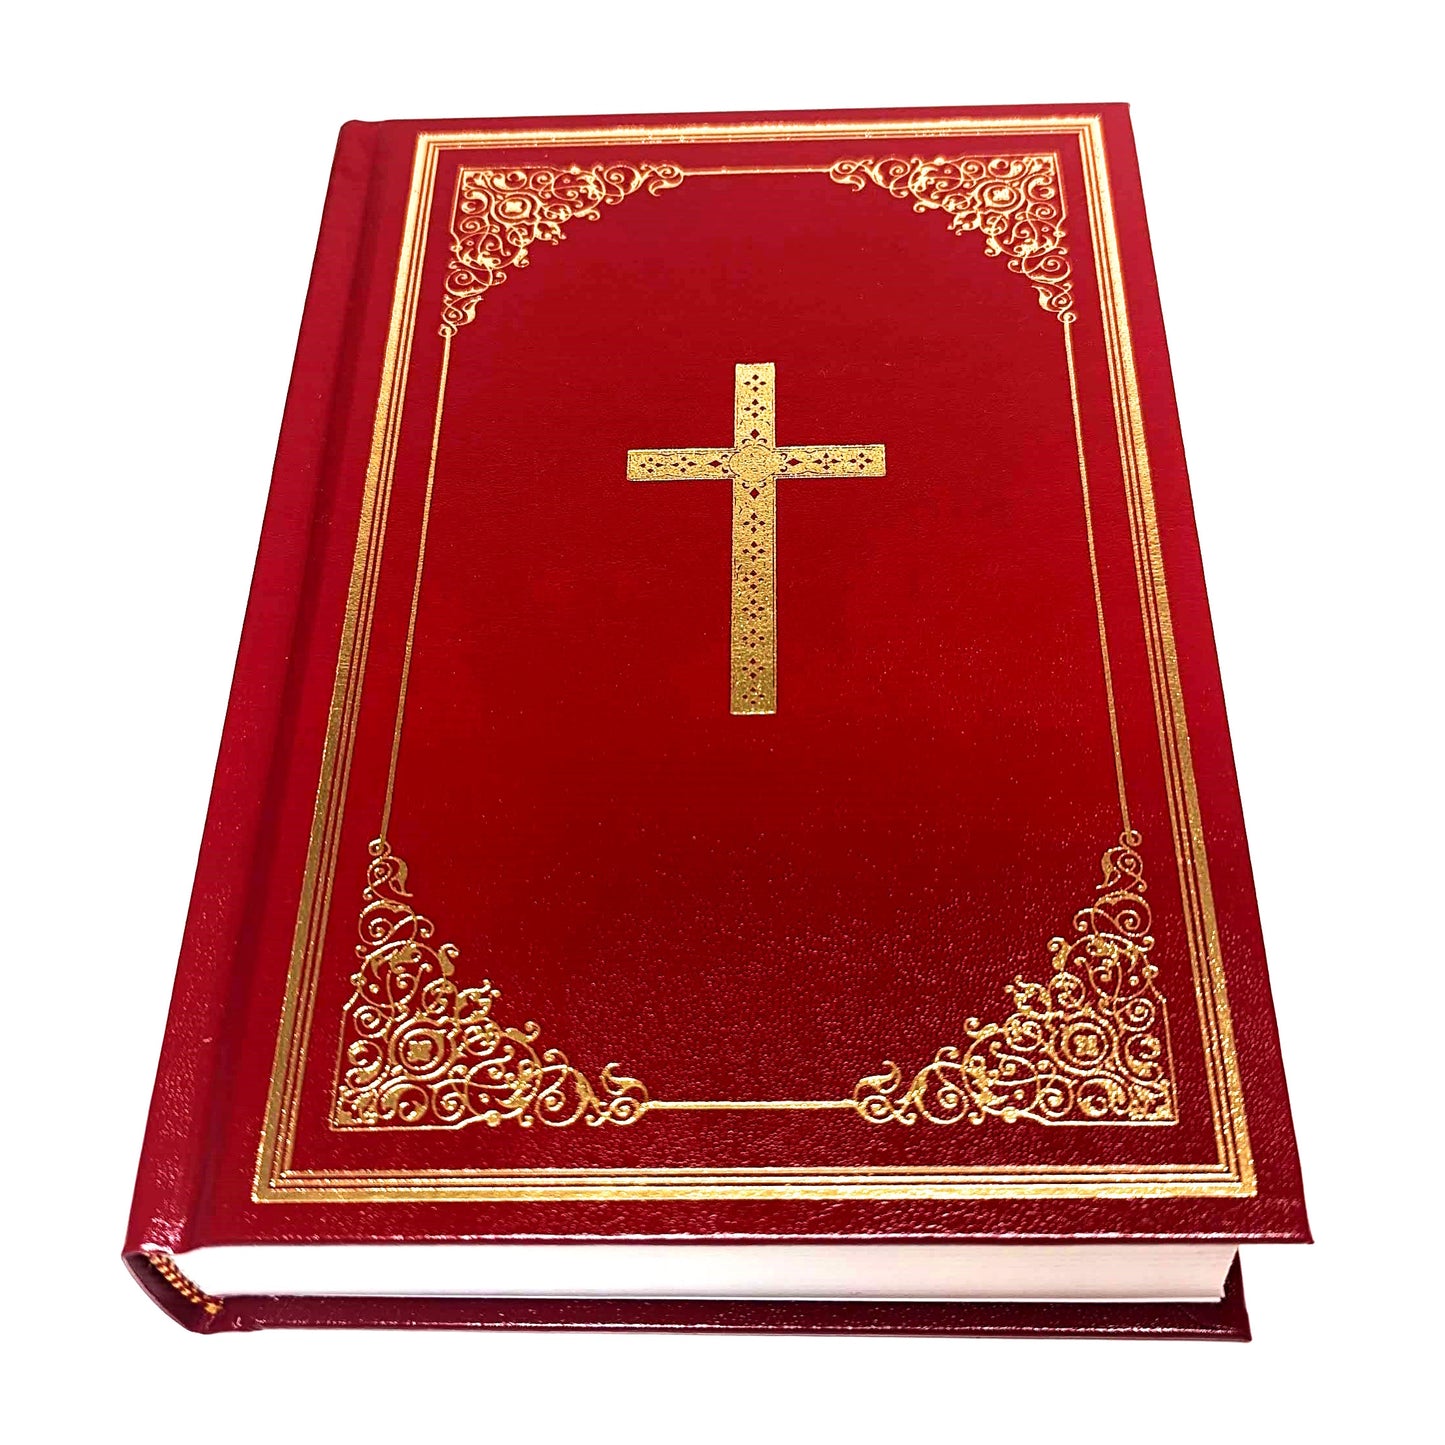 Douay-Rheims Bible Catholic Translation [Hard Cover]